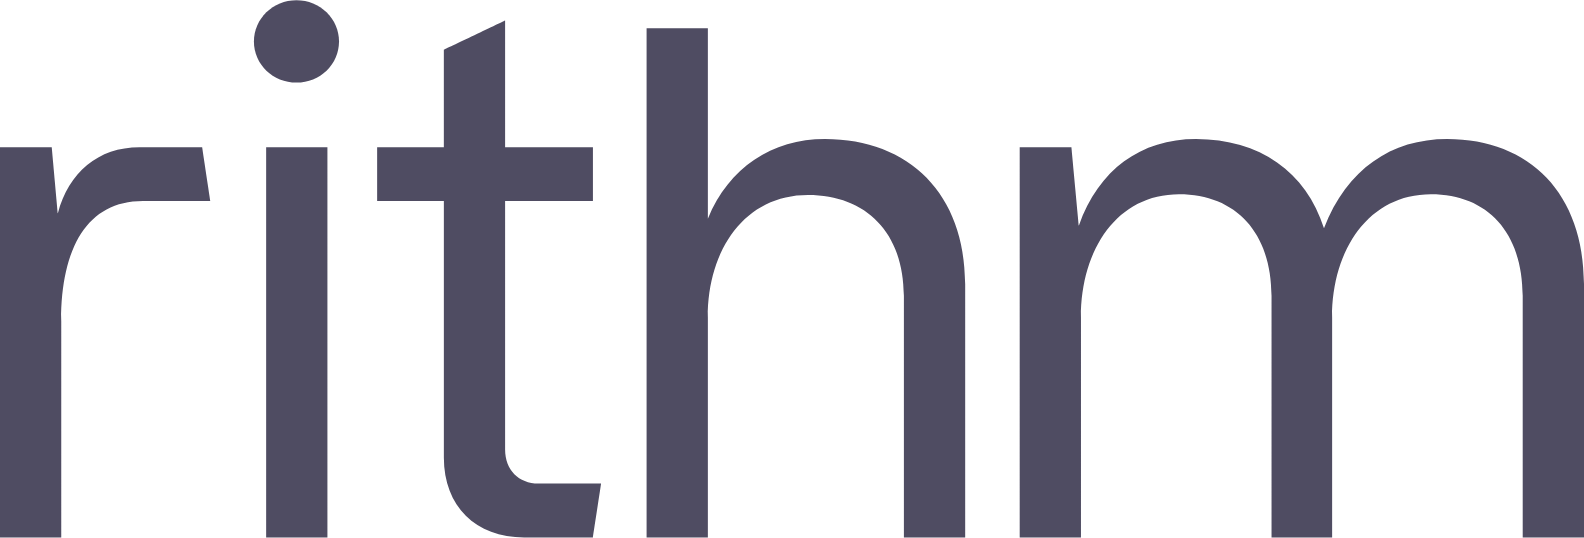 Rithm Capital logo large (transparent PNG)